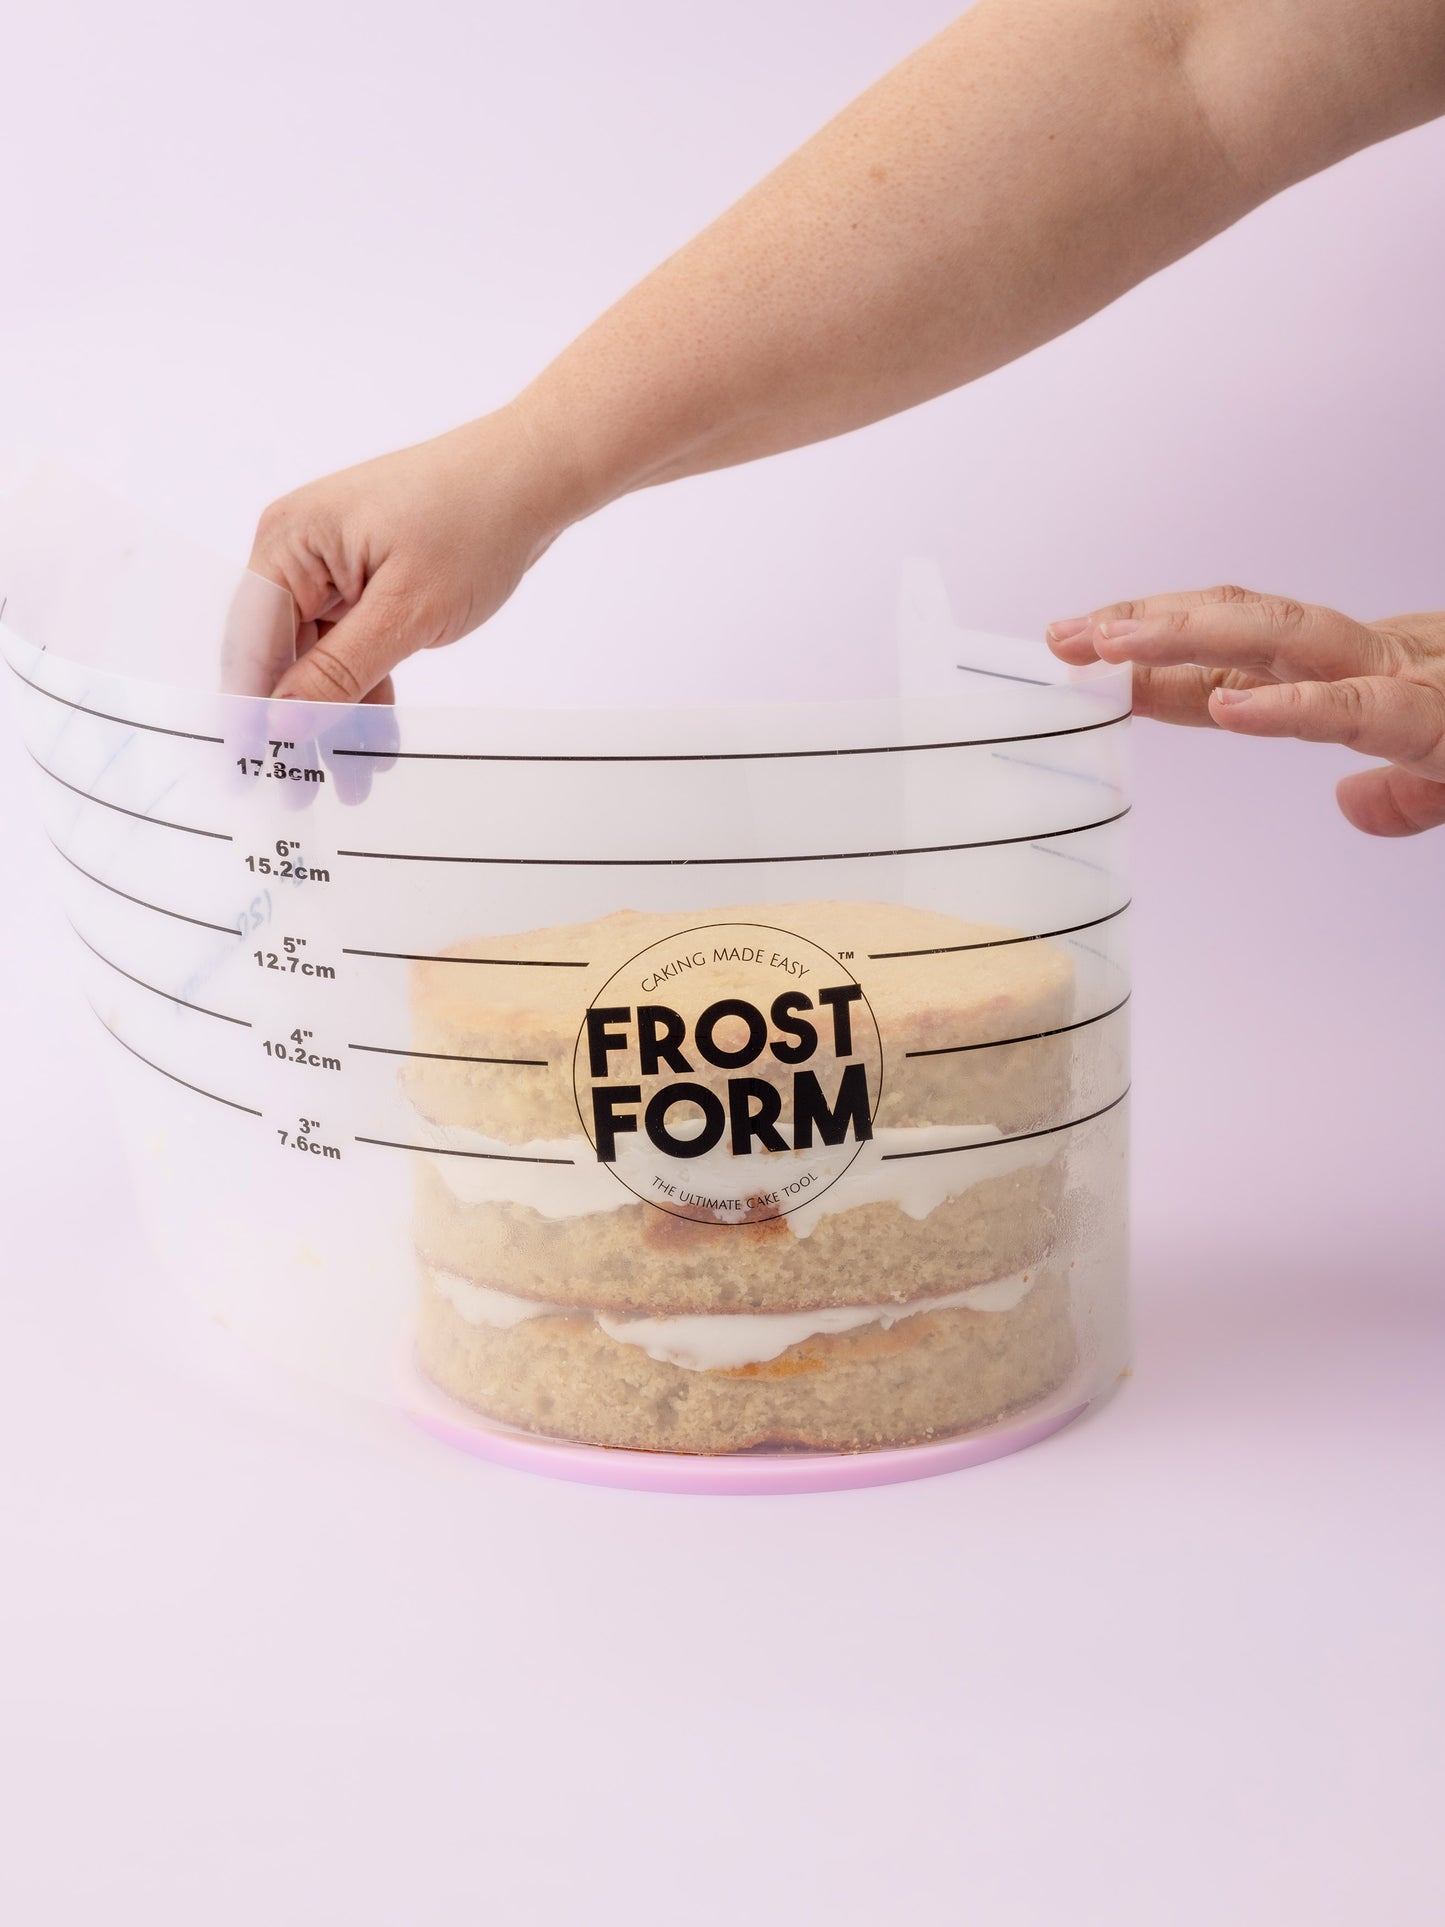 Frost Form Starter+ Kit-8" Round